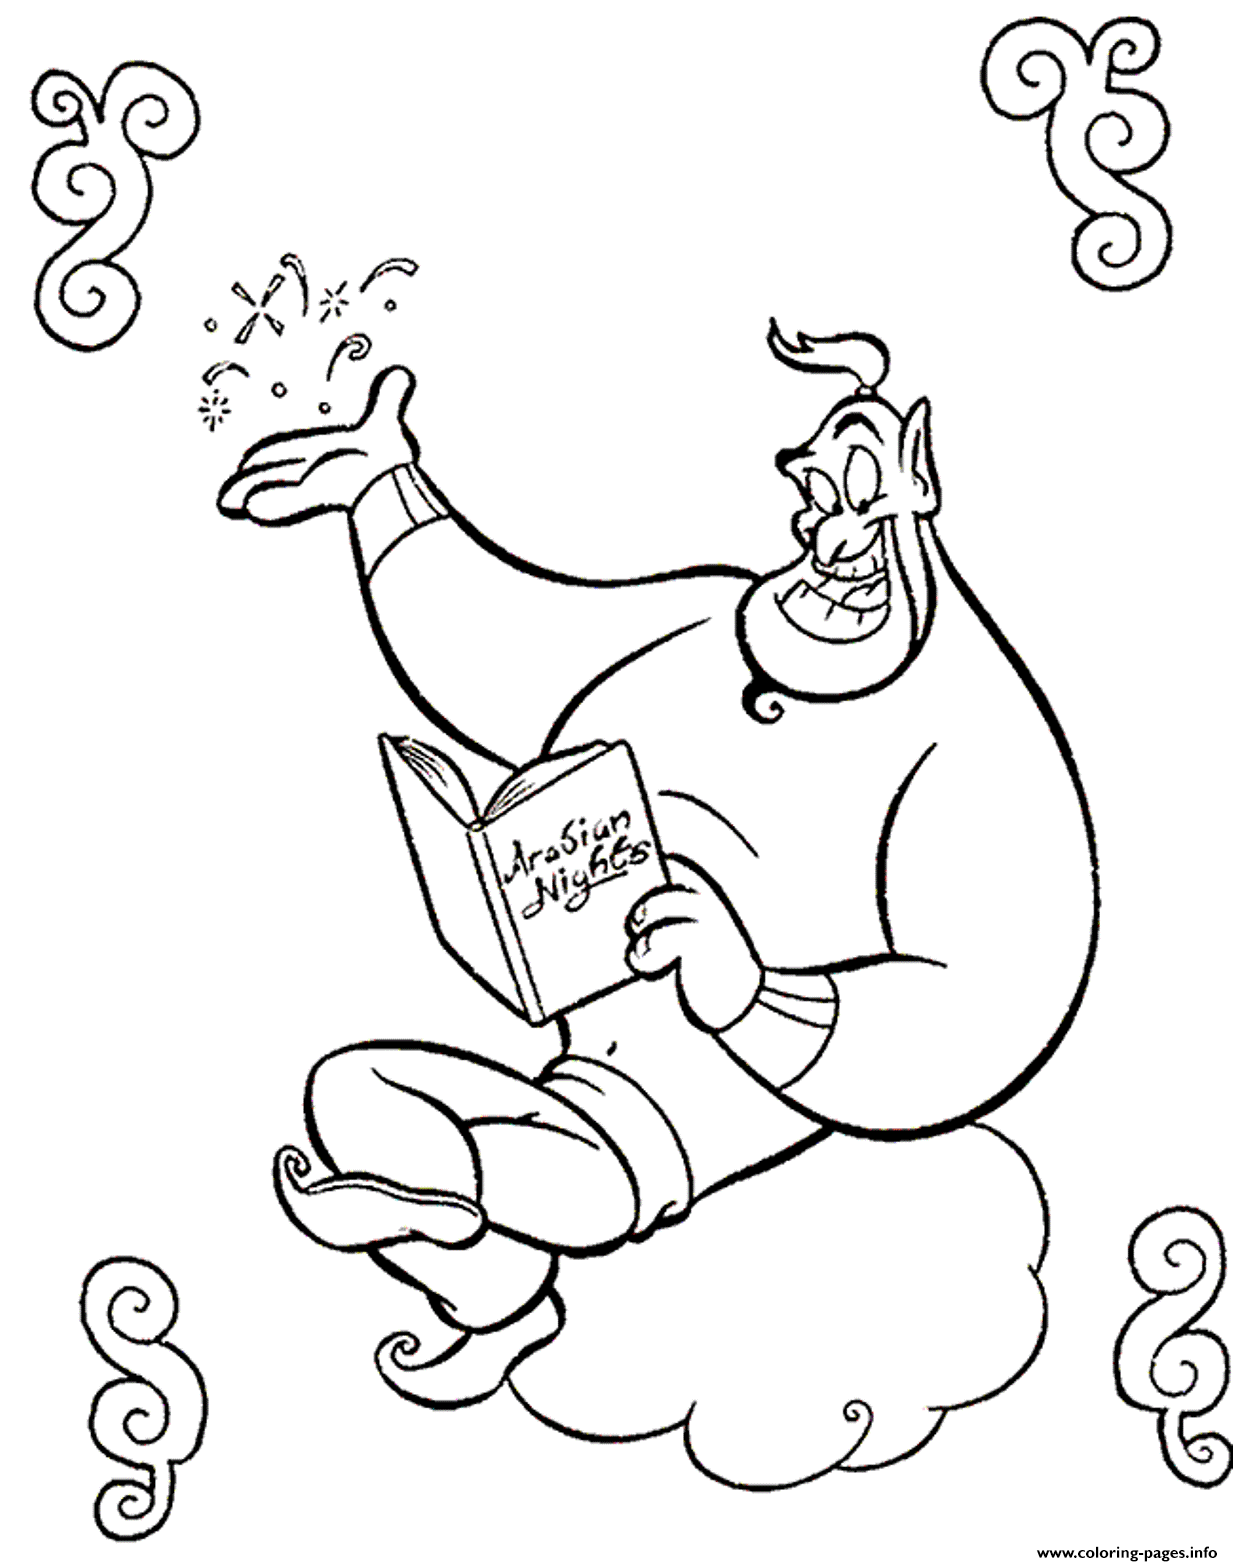 Aladdin S Cartoon Genie5f17 coloring